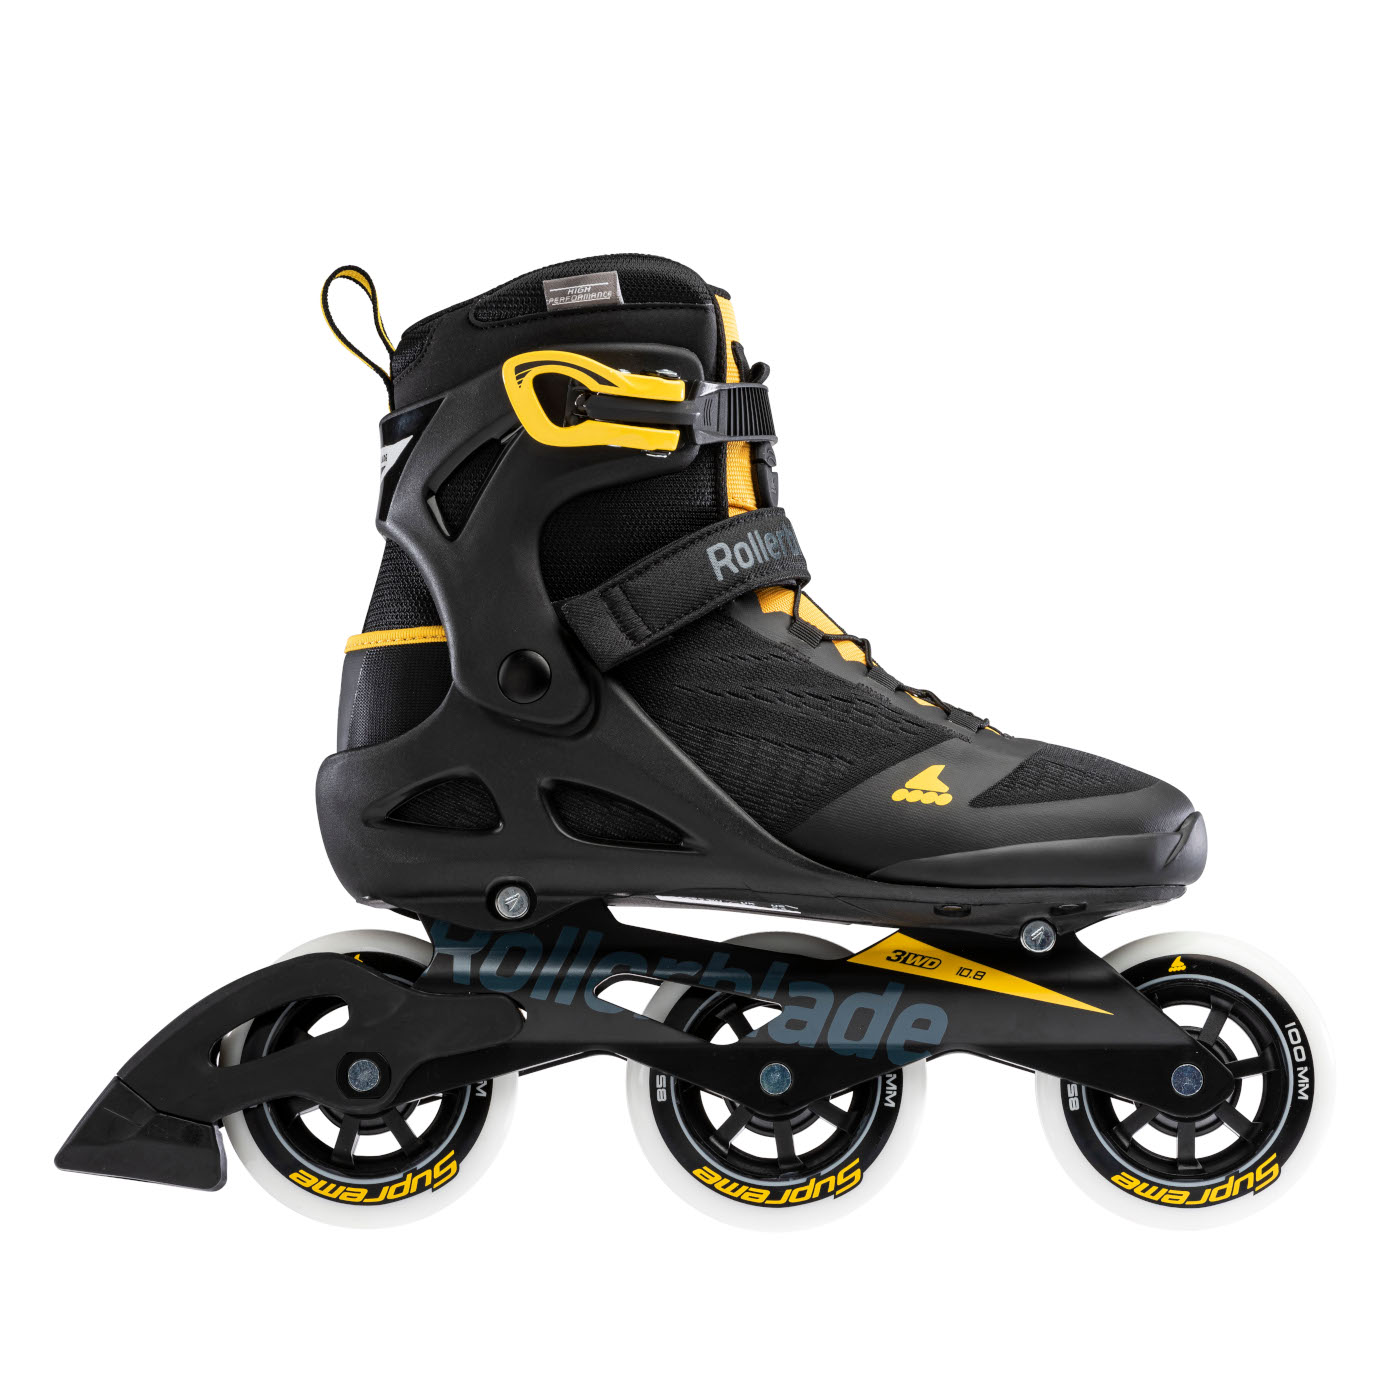 Productfoto van Rollerblade Macroblade 100 3WD - Men Fitness Inline Skates - black/saffron yellow